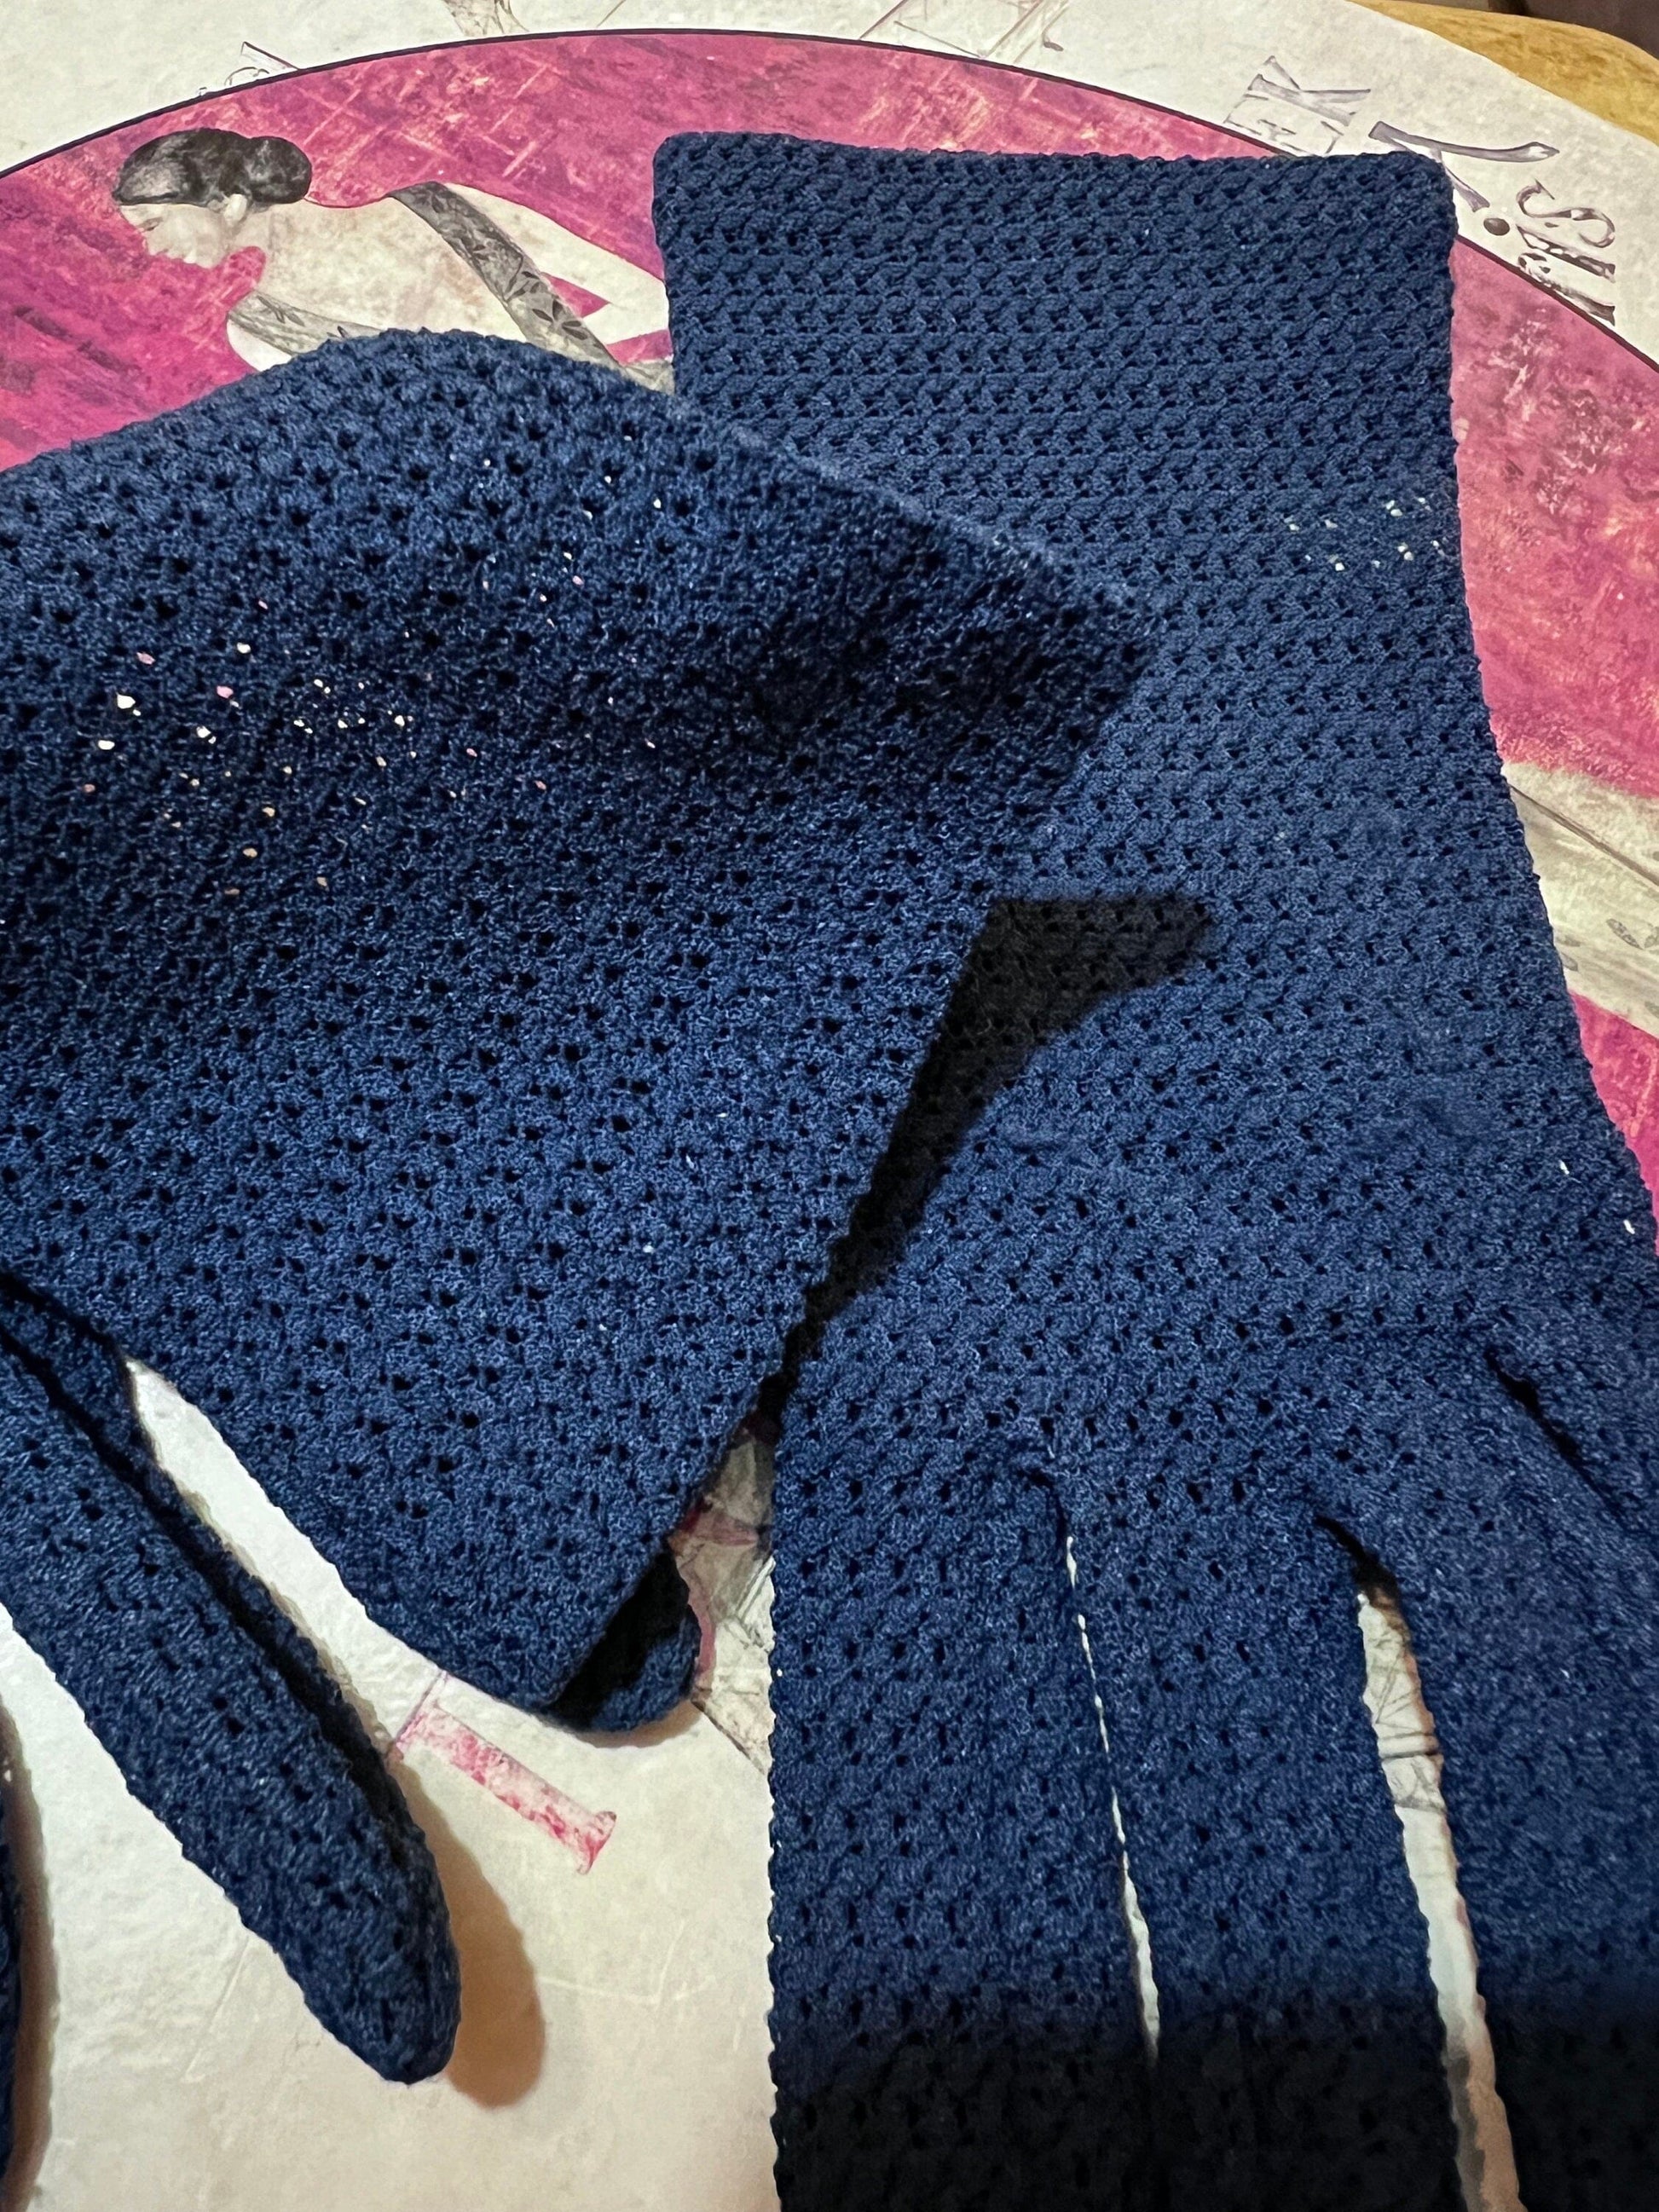 Vintage Ladies navy blue Stretch lace Gloves - lace  Style navy blue Gloves -  Size Small Gloves, Ladies Gloves, navy Gloves, lace gloves